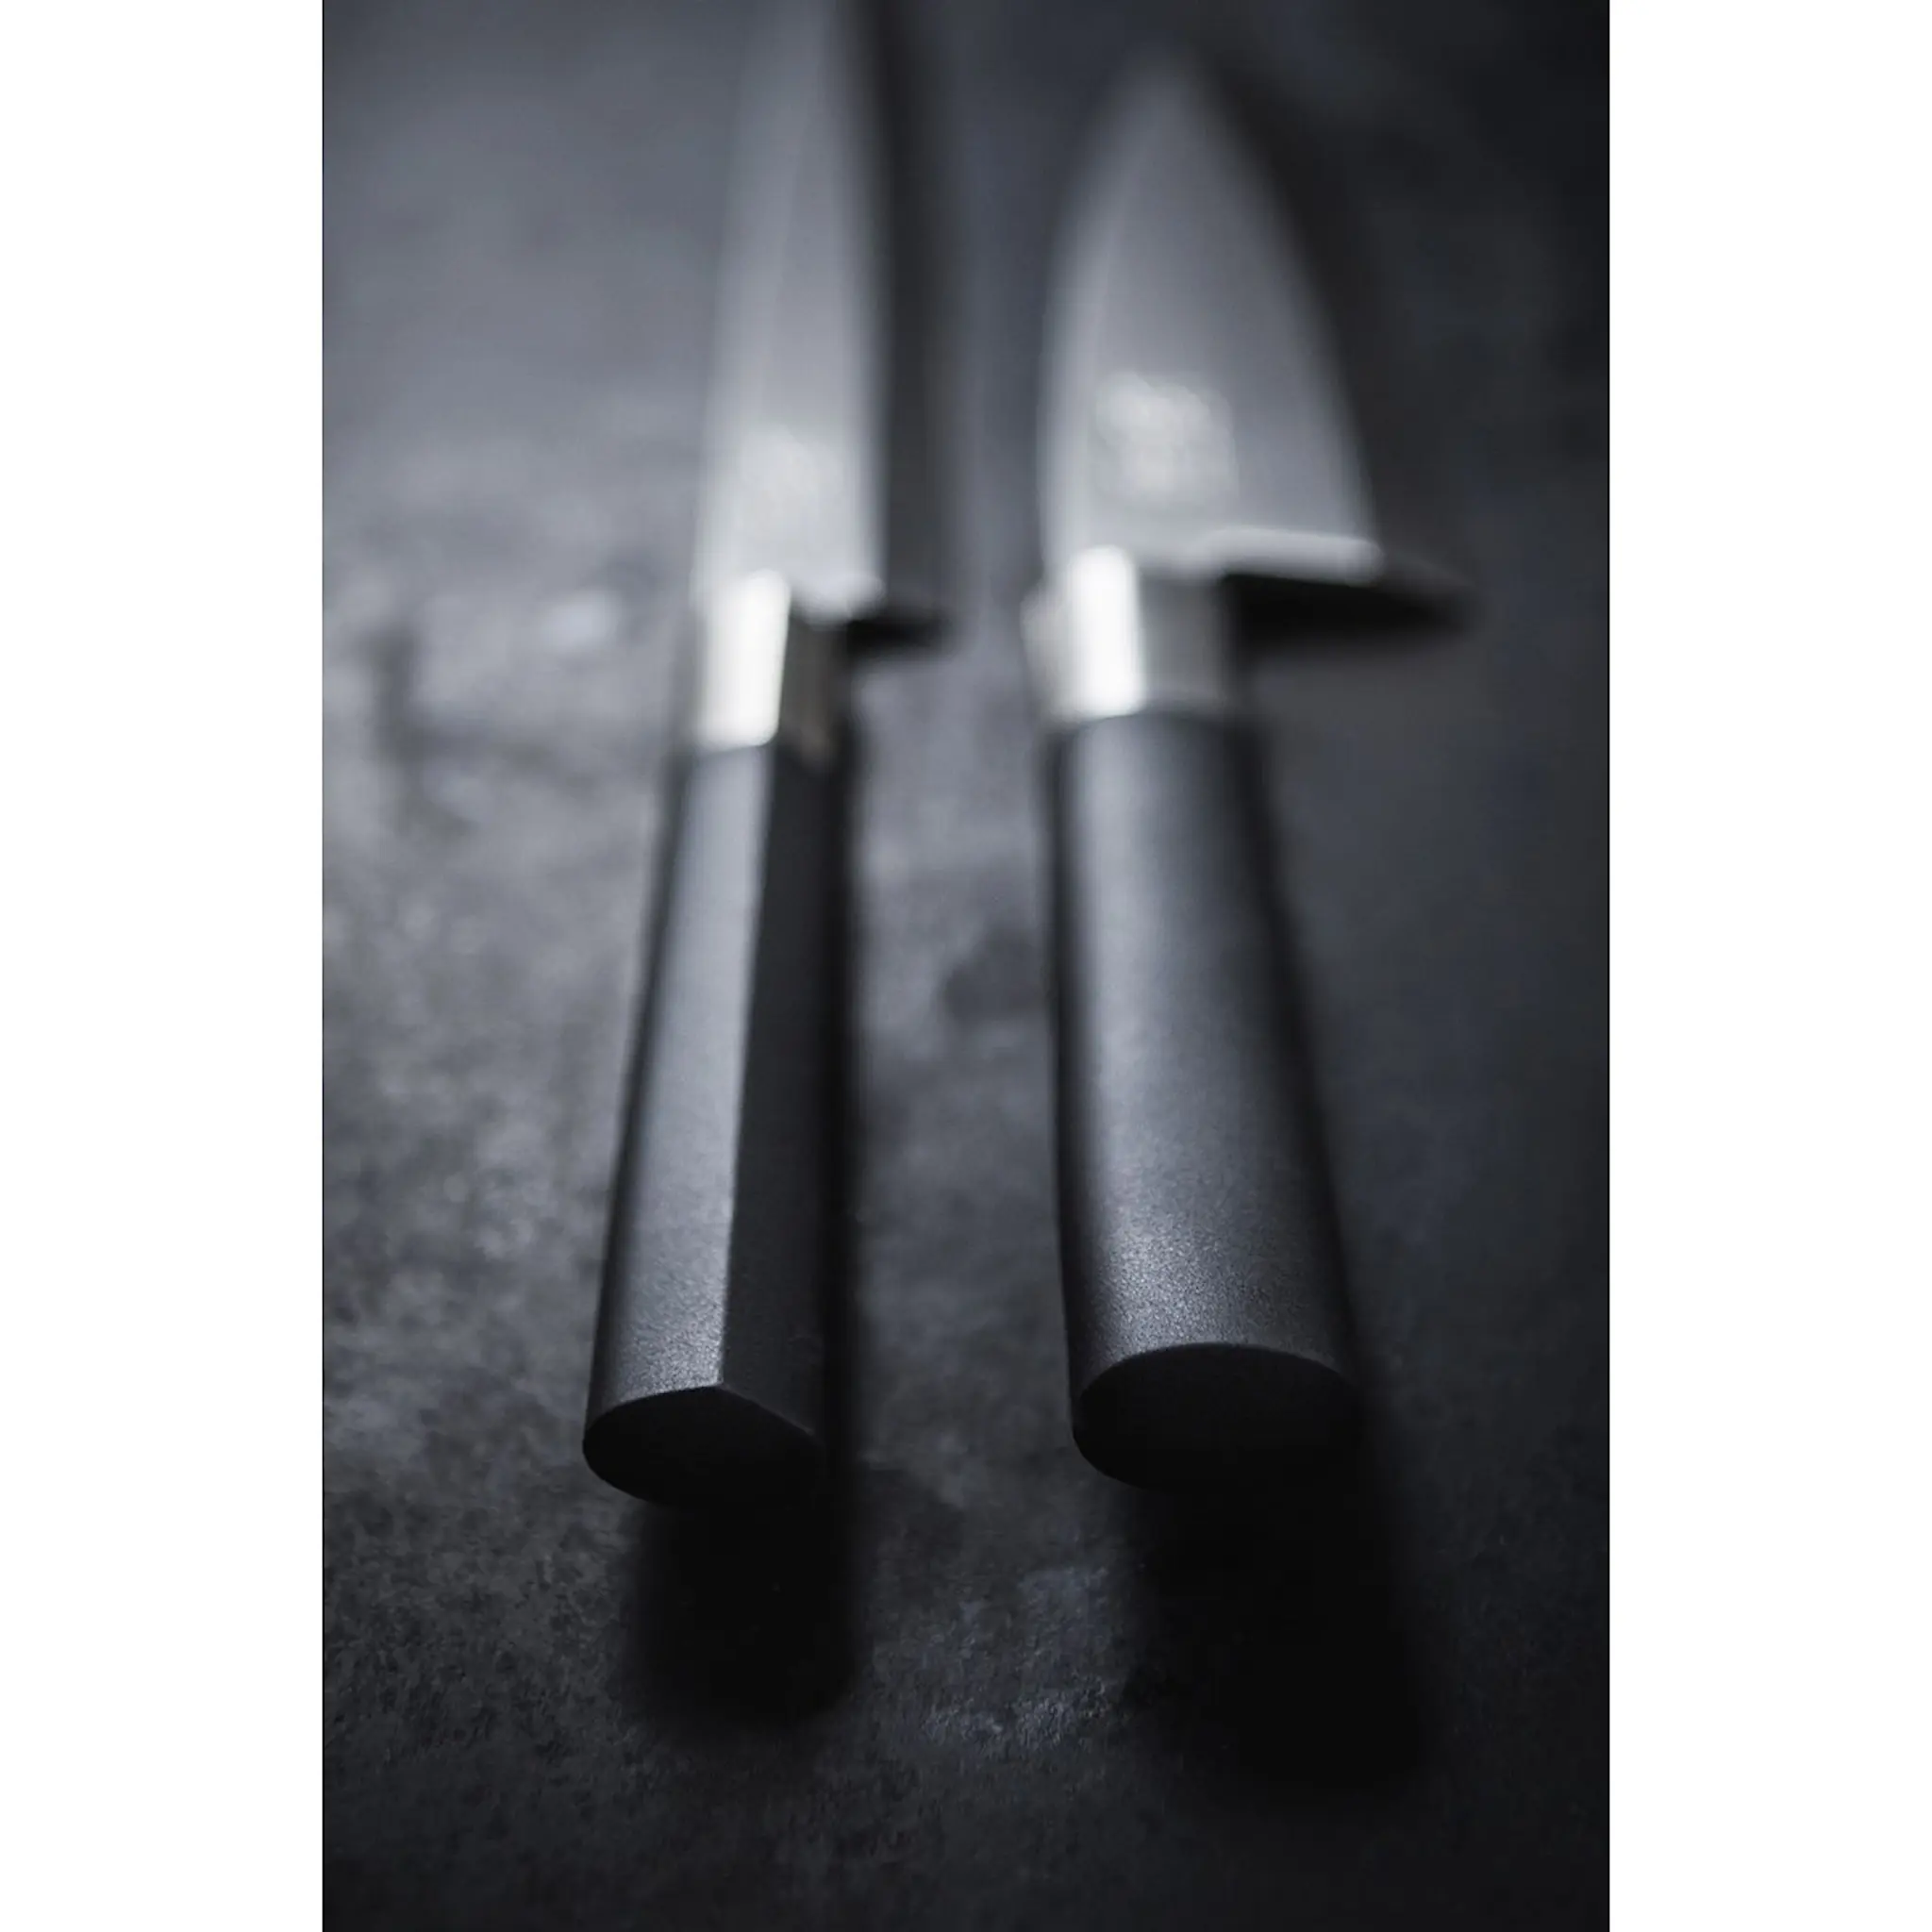 KAI Wasabi Black fleksibel fileteringskniv 18 cm